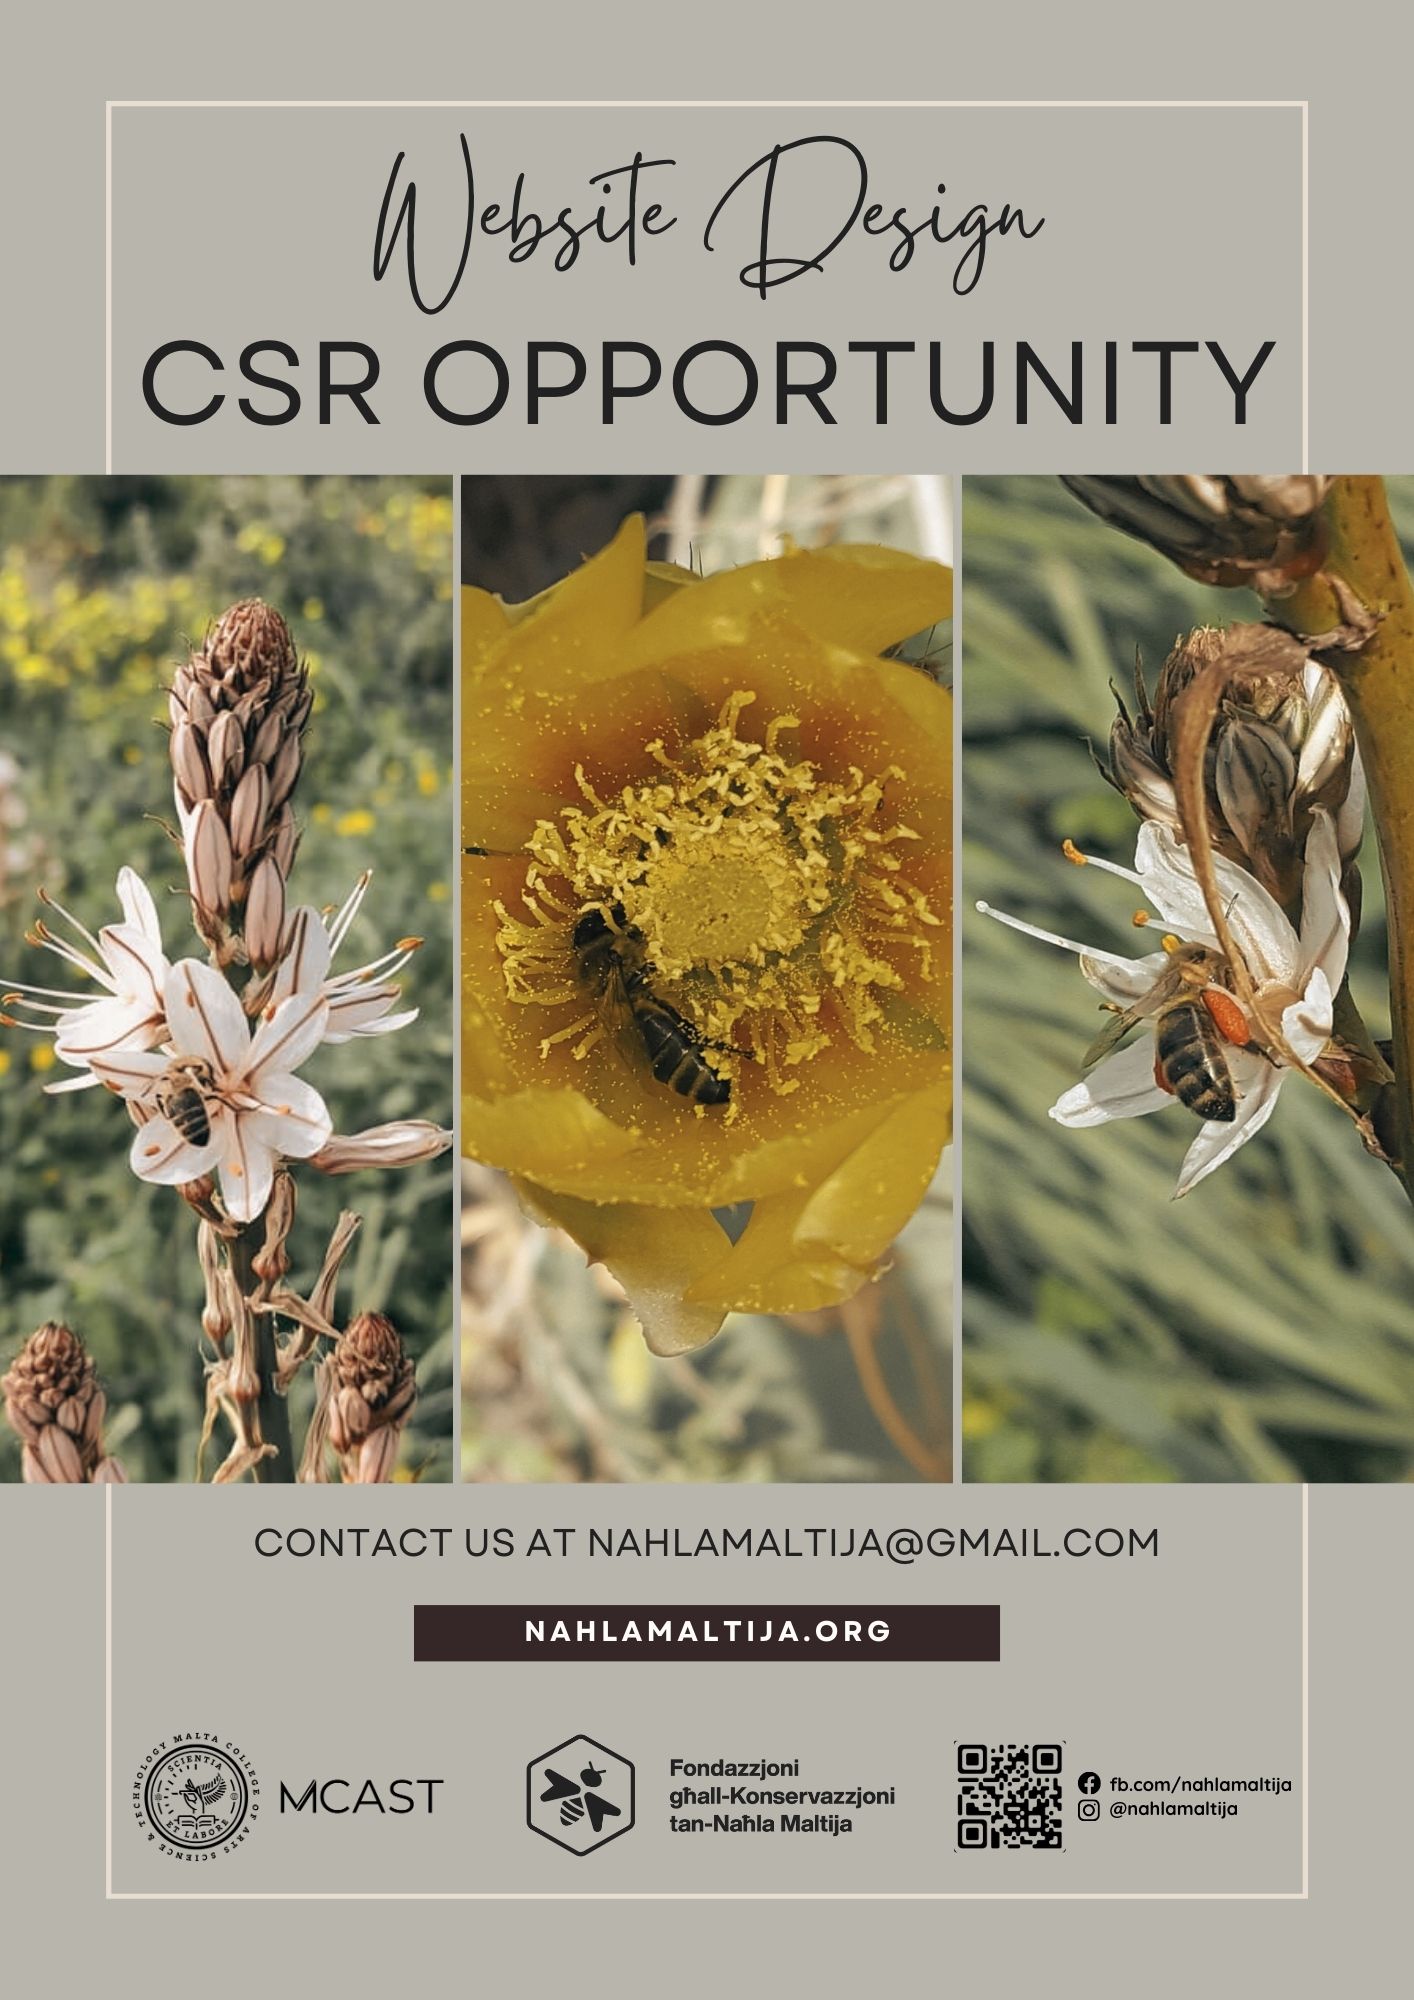 KNM CSR Opportunity - Website Design